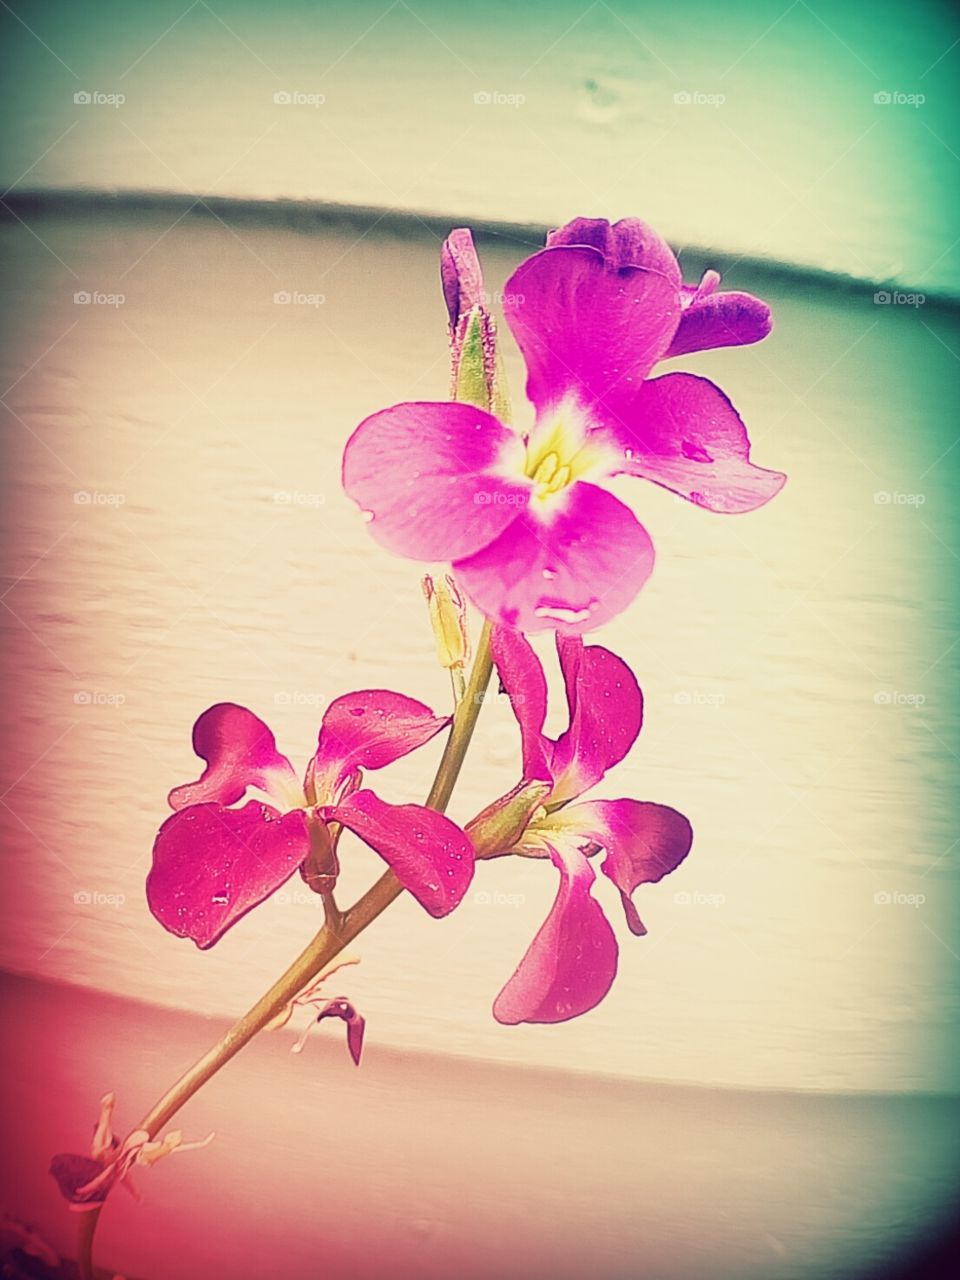 Beautiful and simple Purple Flowers. ❀